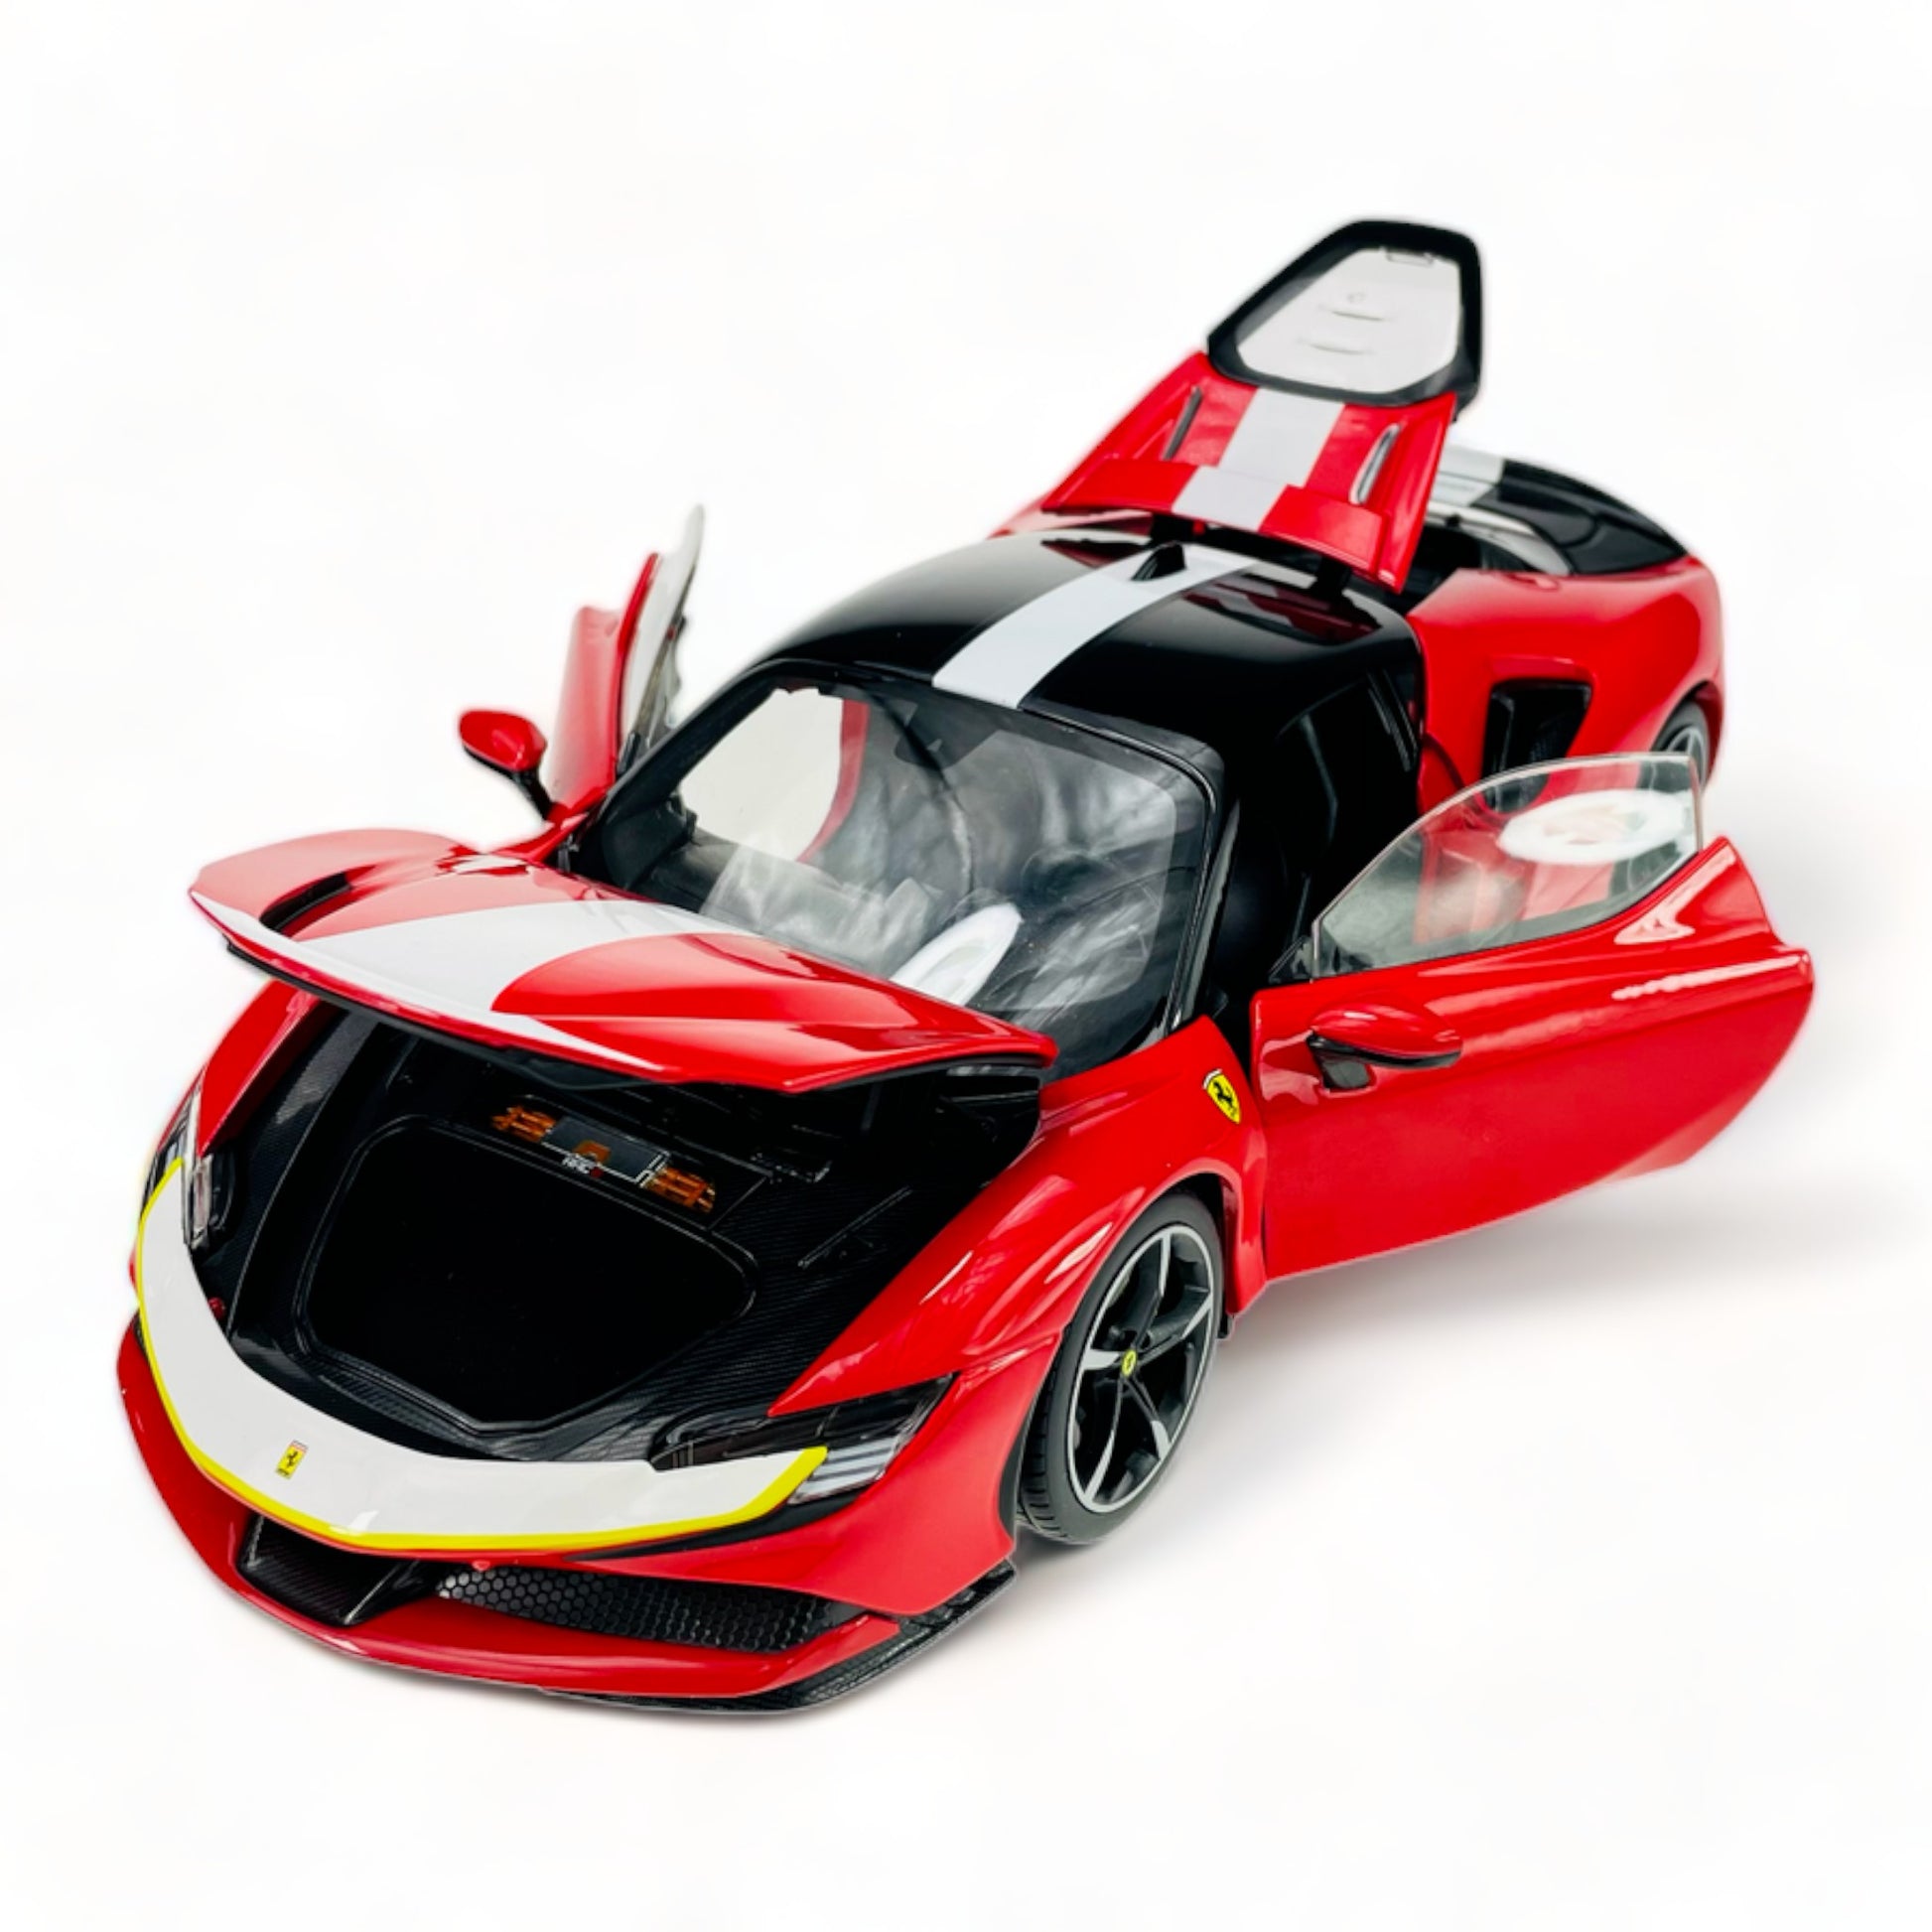 1/18 Diecast Ferrari SF90 Stradale Red "Signature Series" by Bburago Scale Model Car